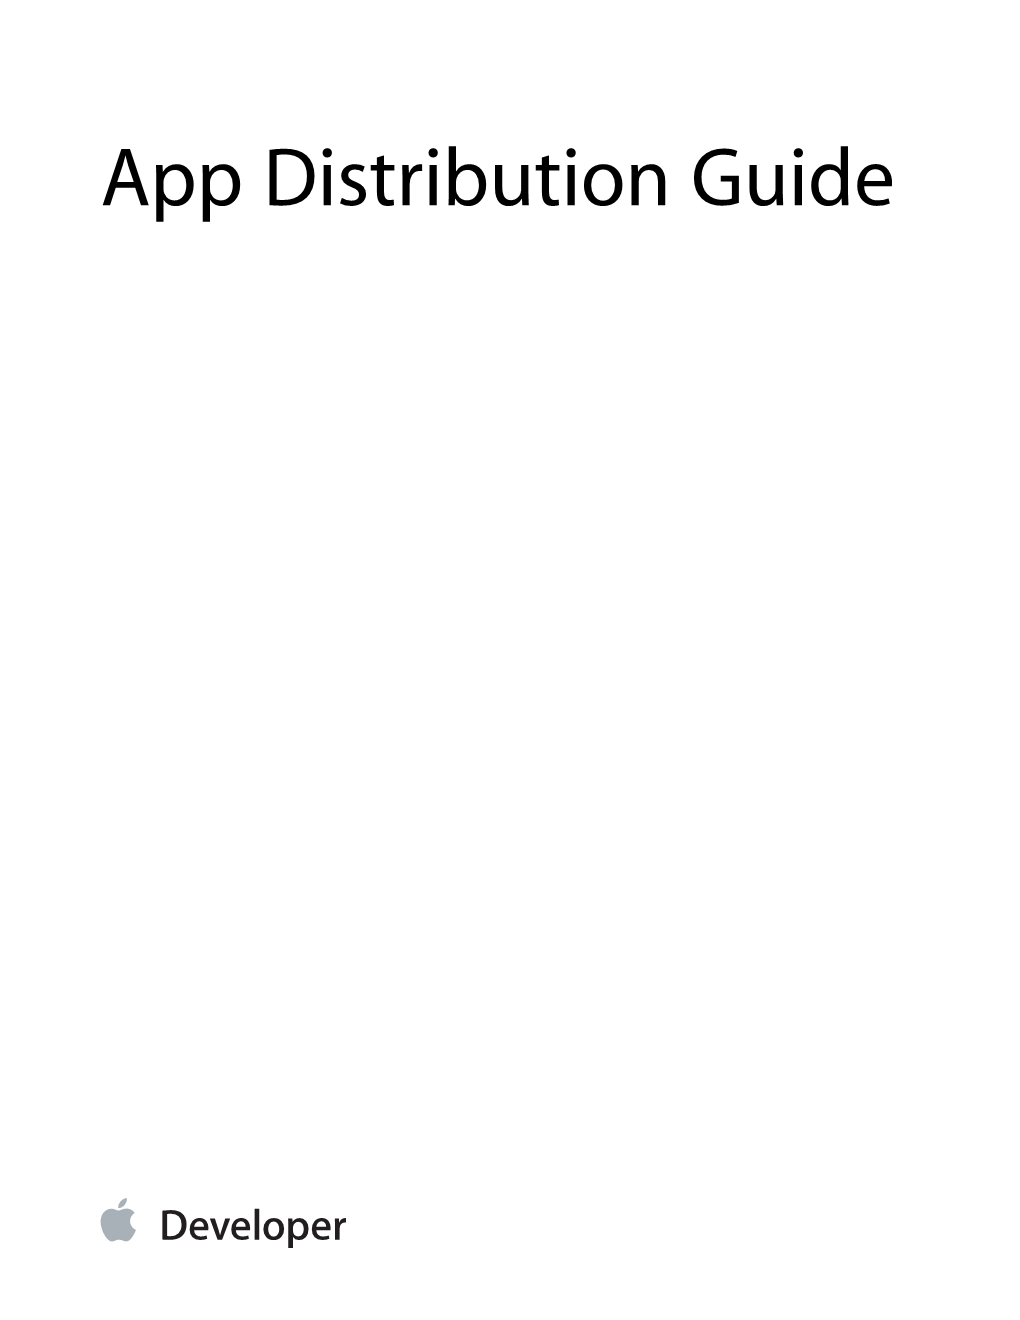 App Distribution Guide Contents